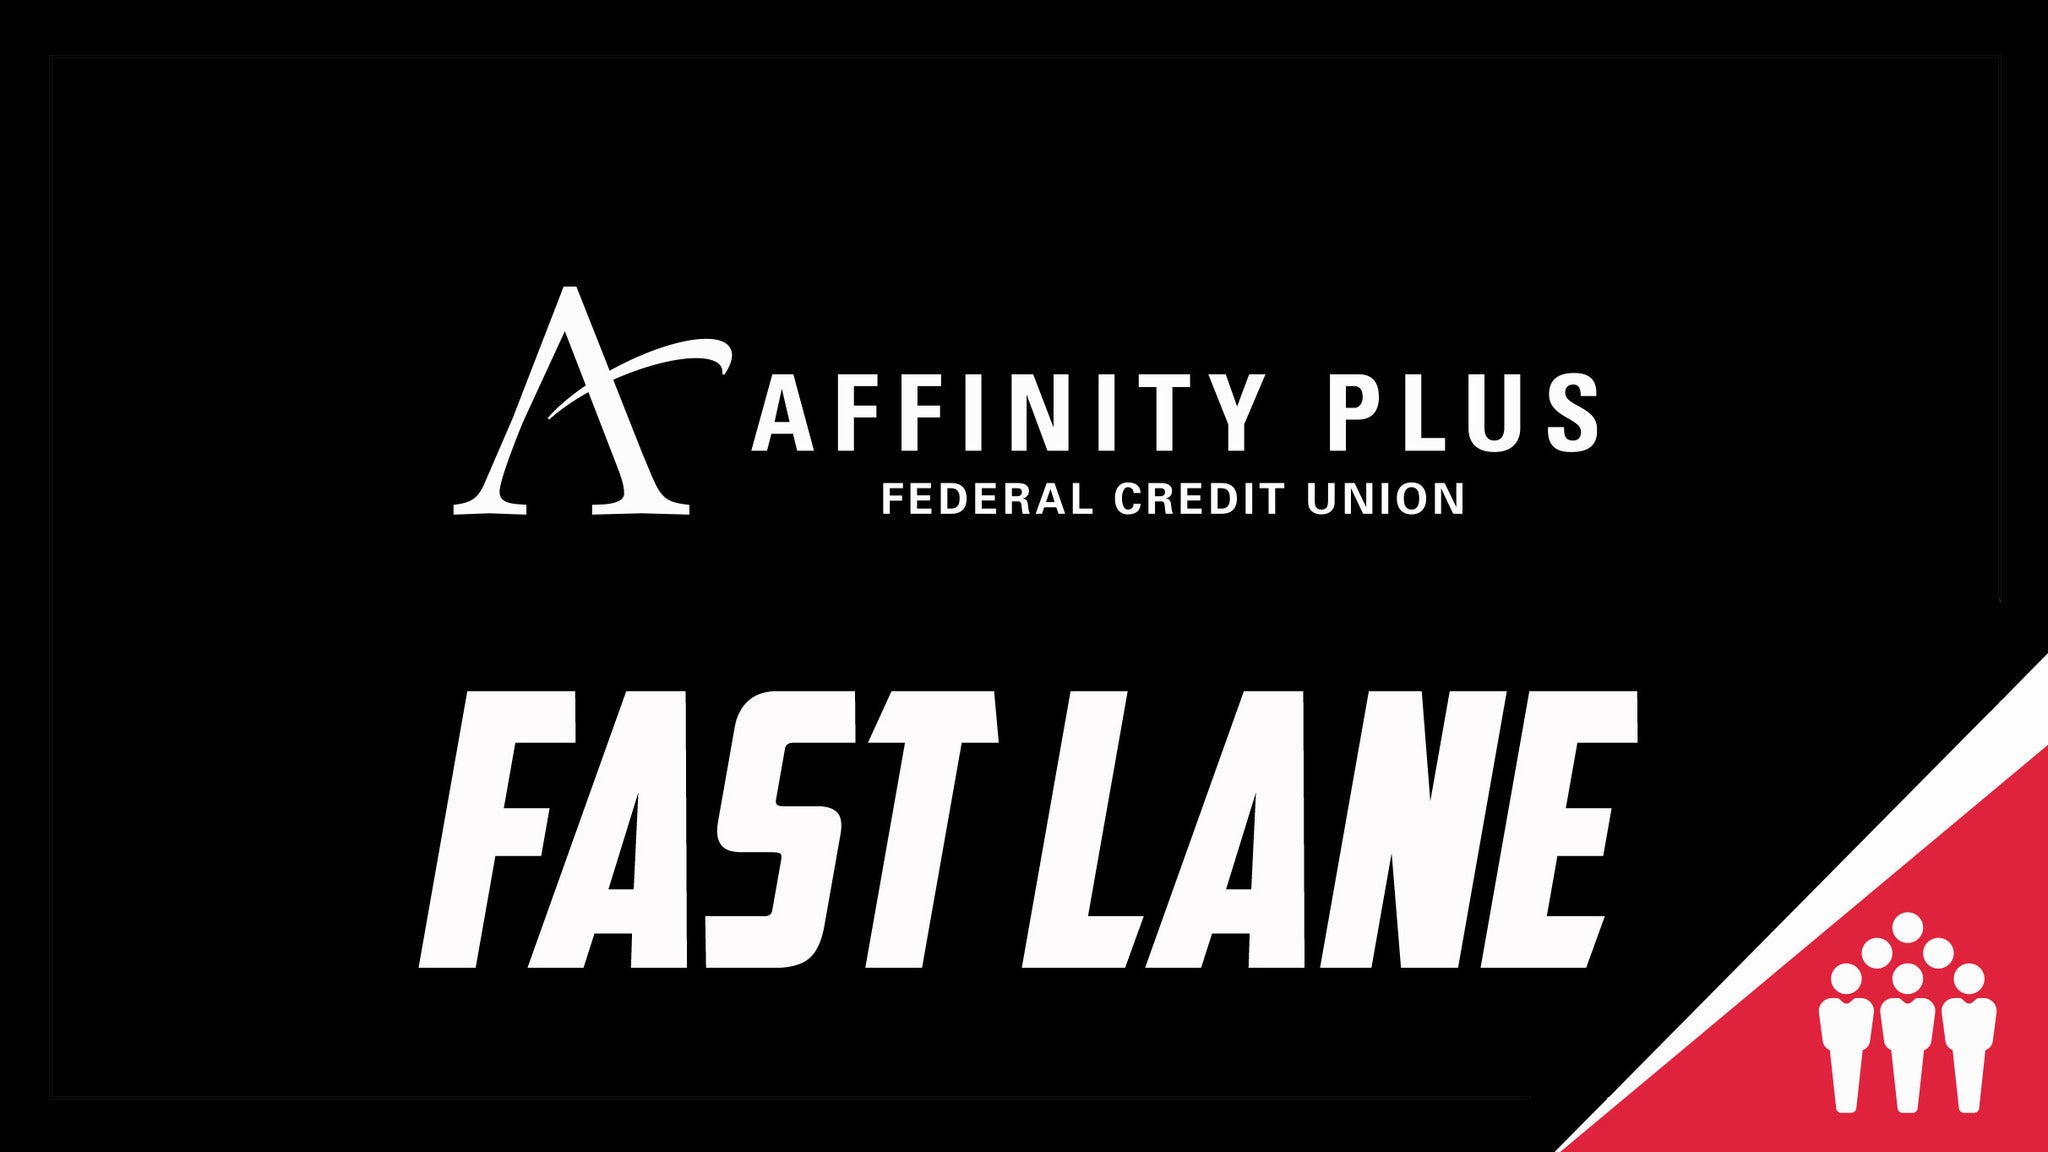 Fillmore Minneapolis - Fast Lane Access - Venue Sponsored - Affinity Plus presale information on freepresalepasswords.com